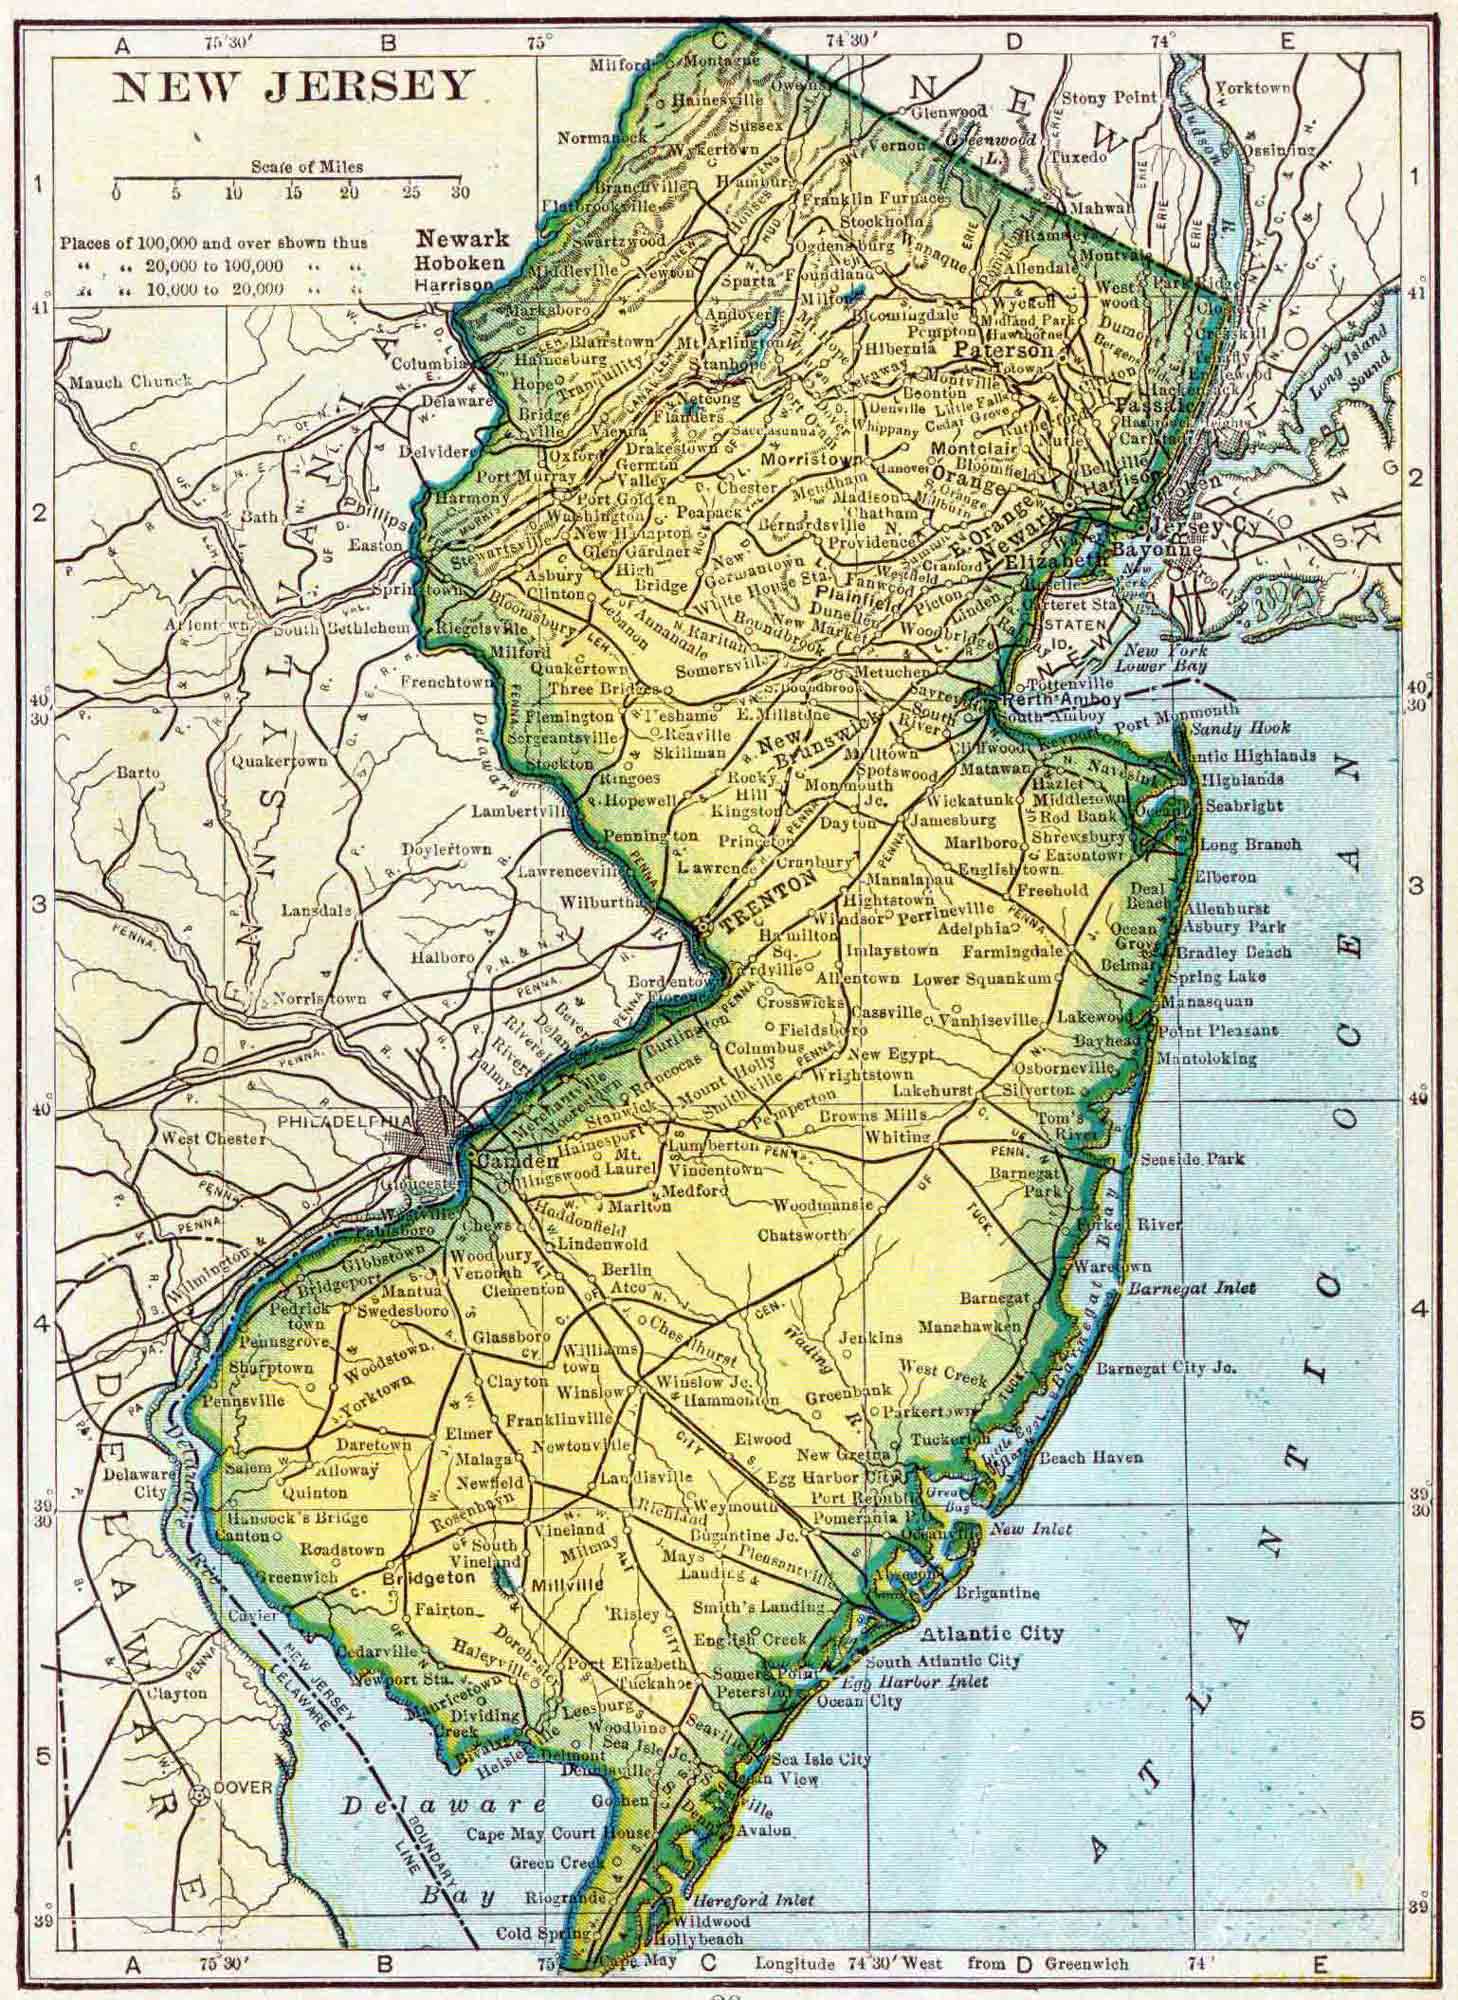 New Jersey Genealogy - Free NJ Genealogy - Access Genealogy